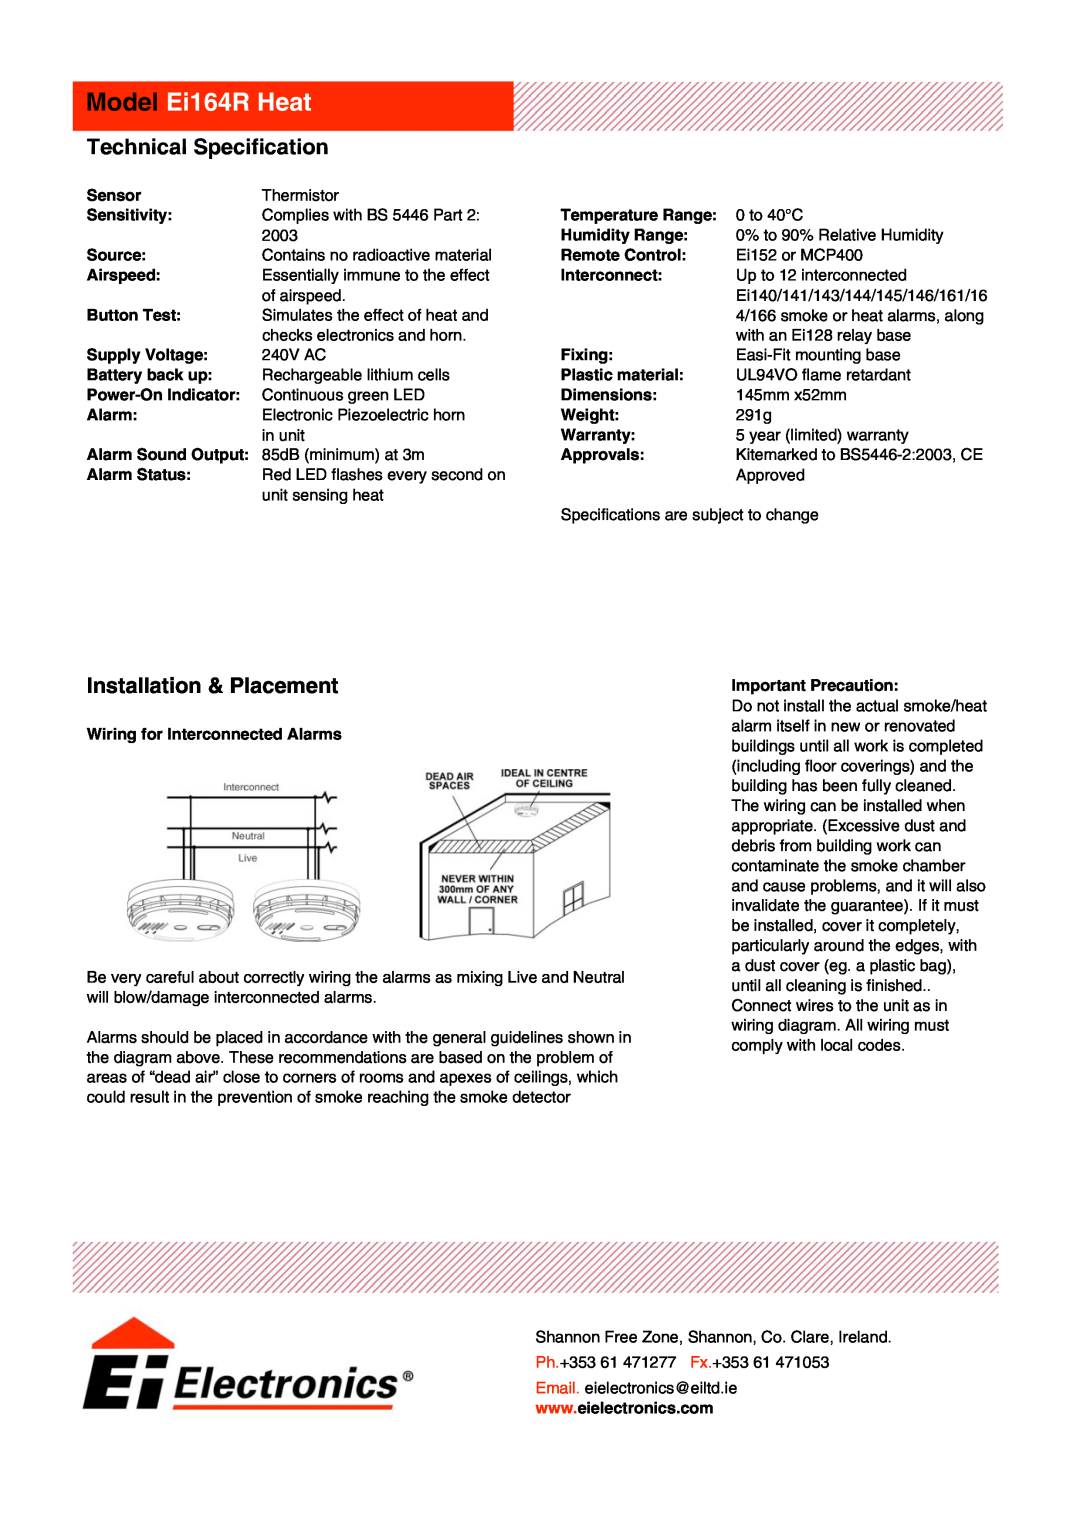 Ei Electronics Ei 164R Heat manual Model Ei164R Heat, Technical Specification, Installation & Placement 